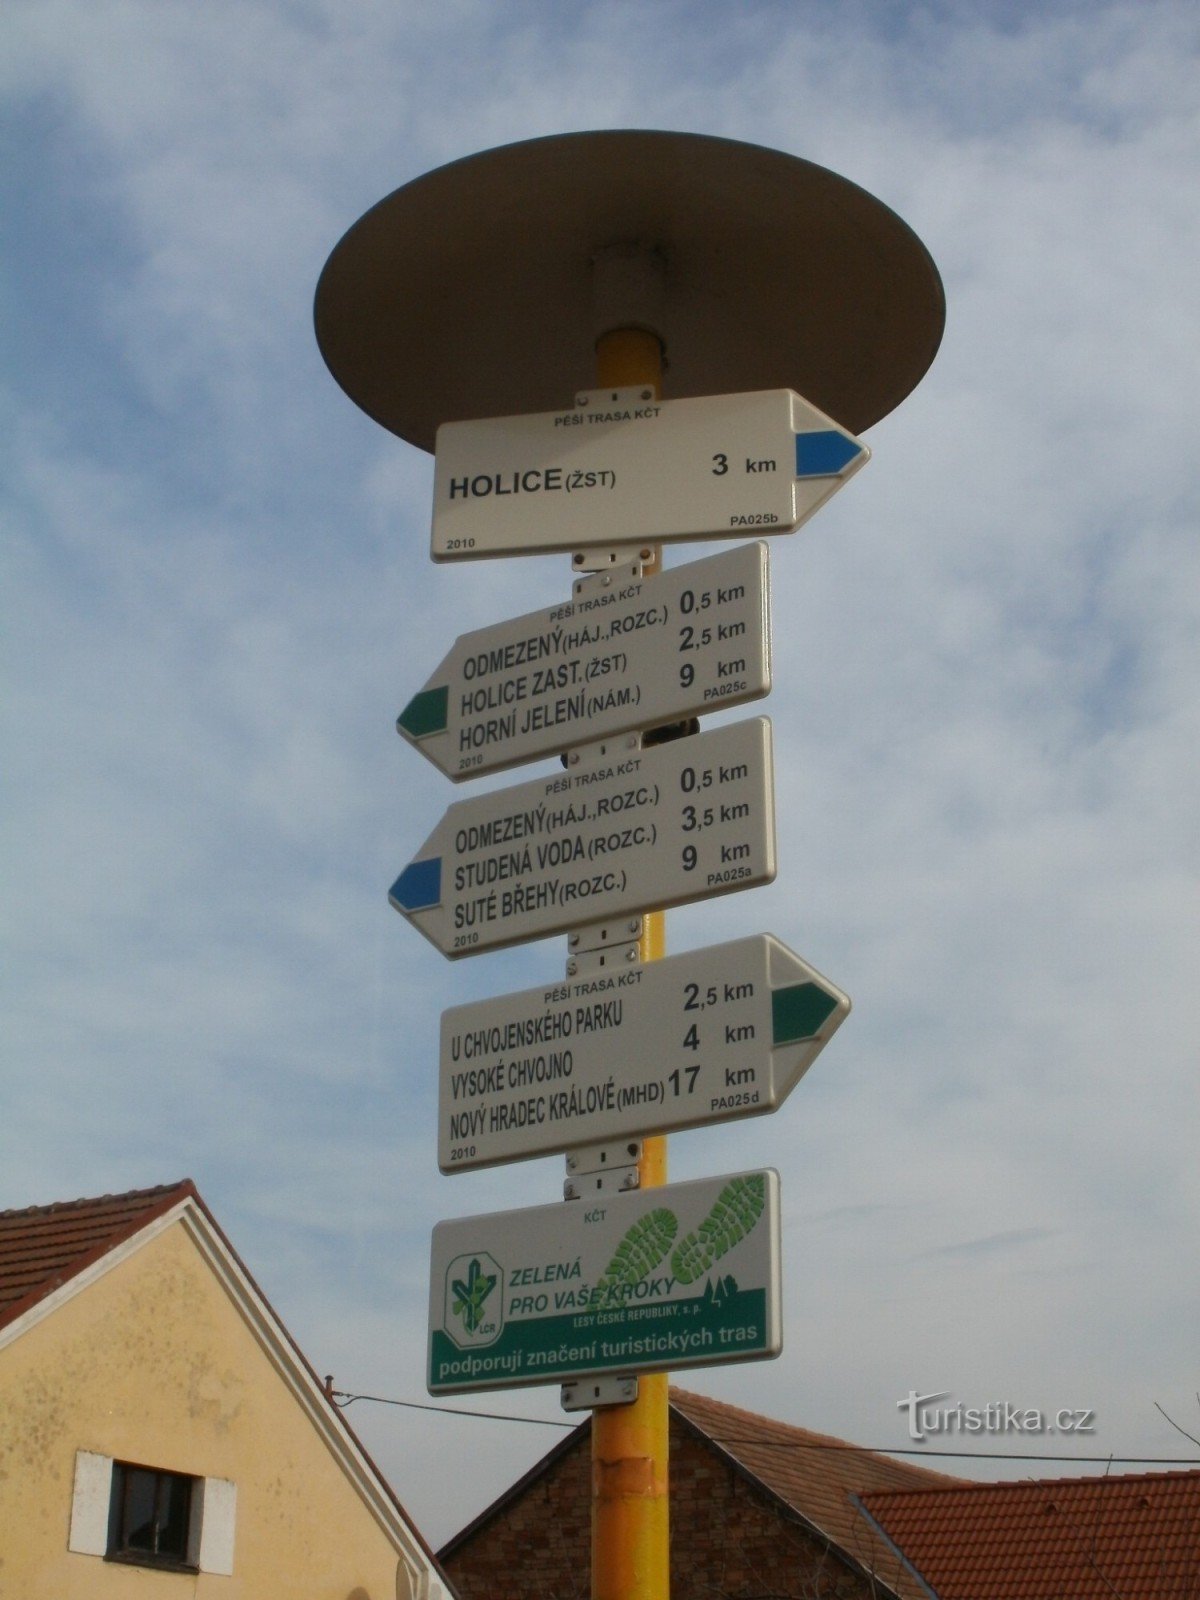 Pobežovice toeristisch kruispunt